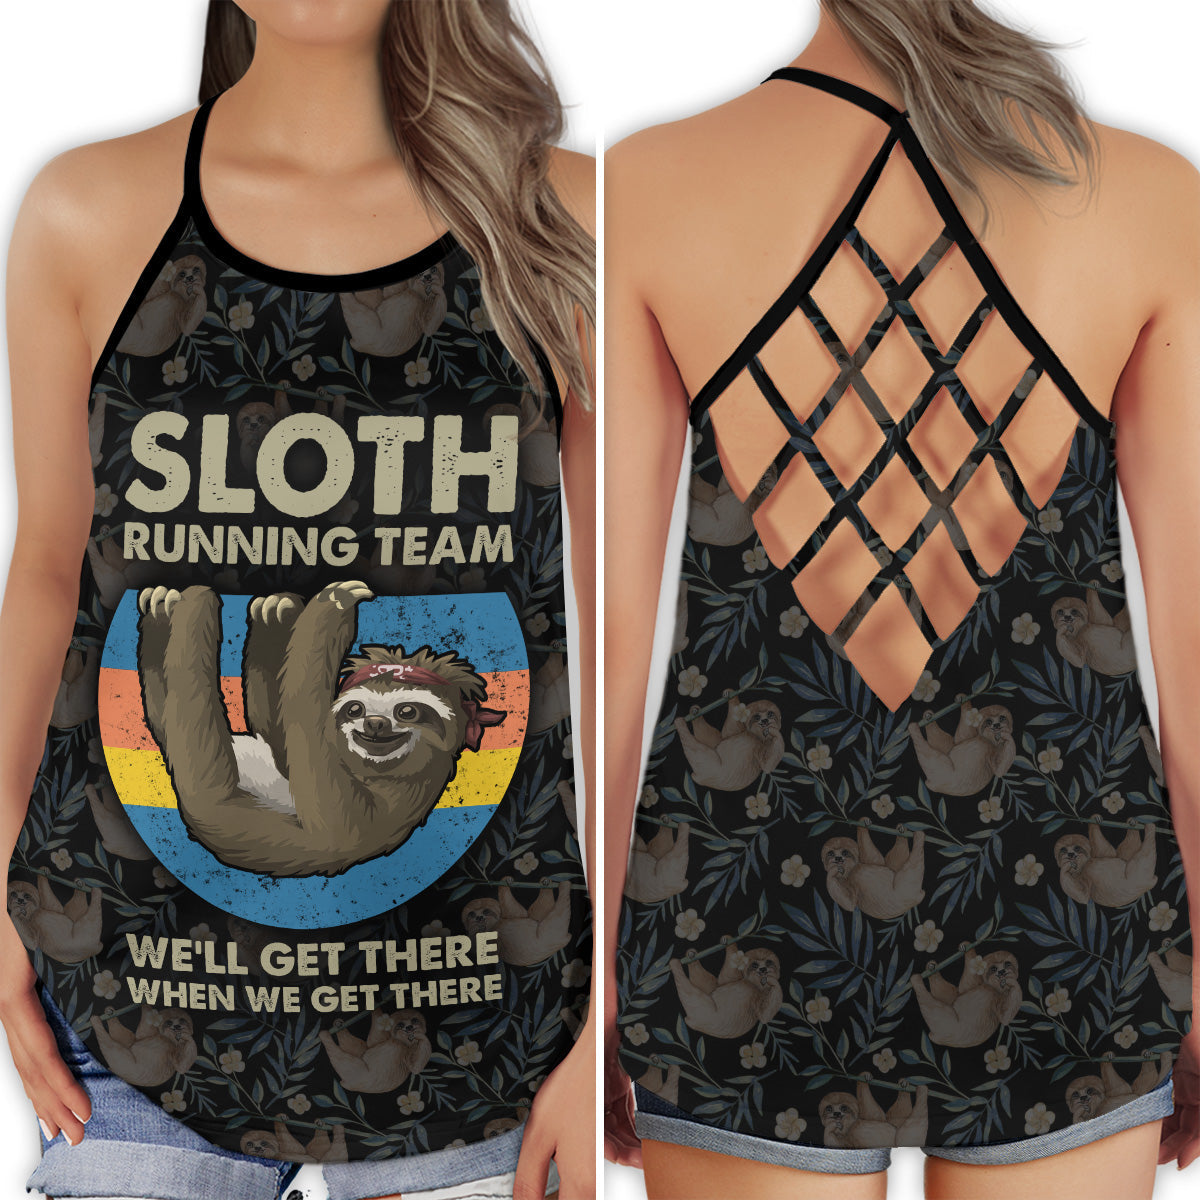 S Sloth Running Team - Cross Open Back Tank Top - Owls Matrix LTD